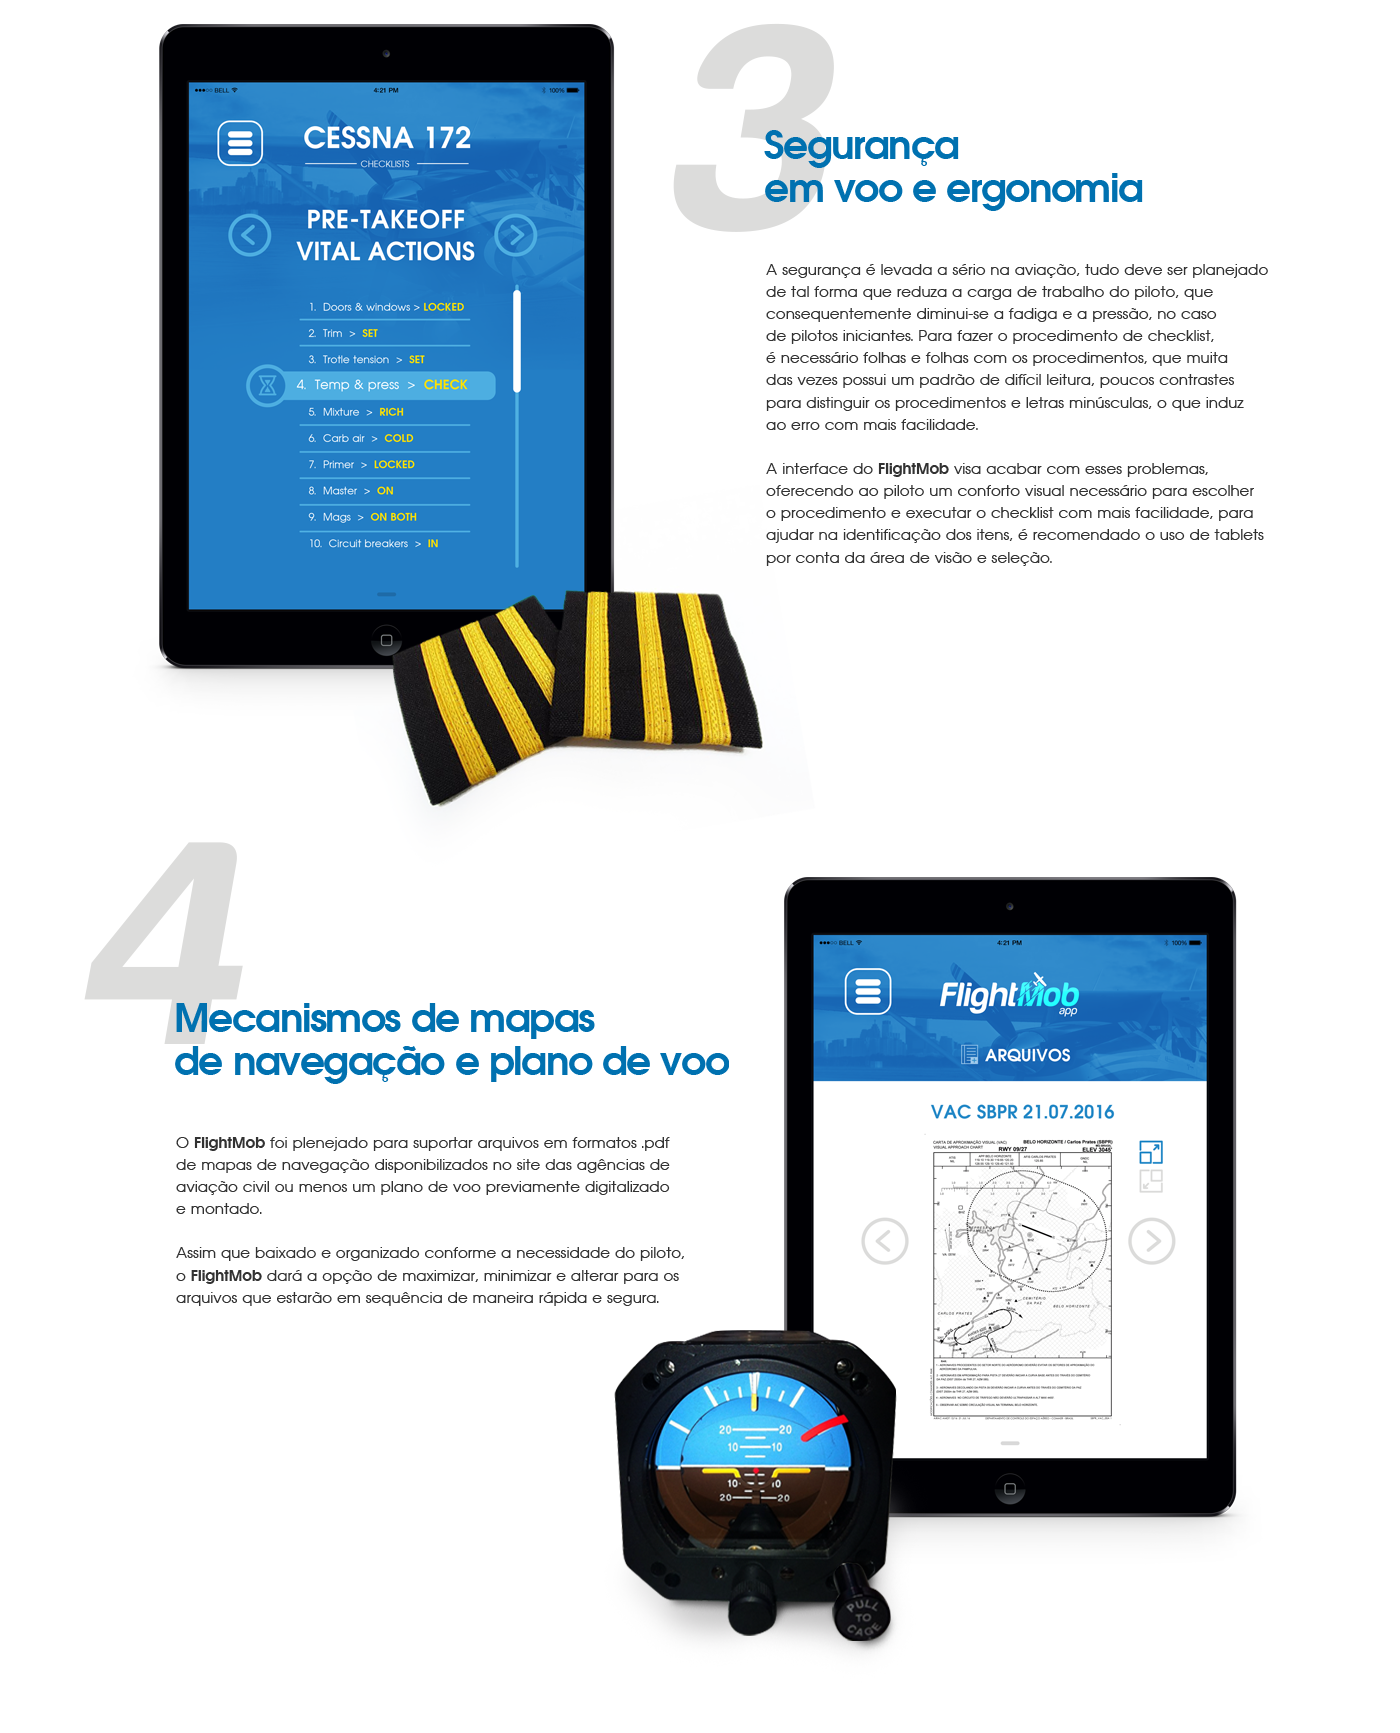 app flight mobile Pilot aviation branding  iPad UX design SKY airplane